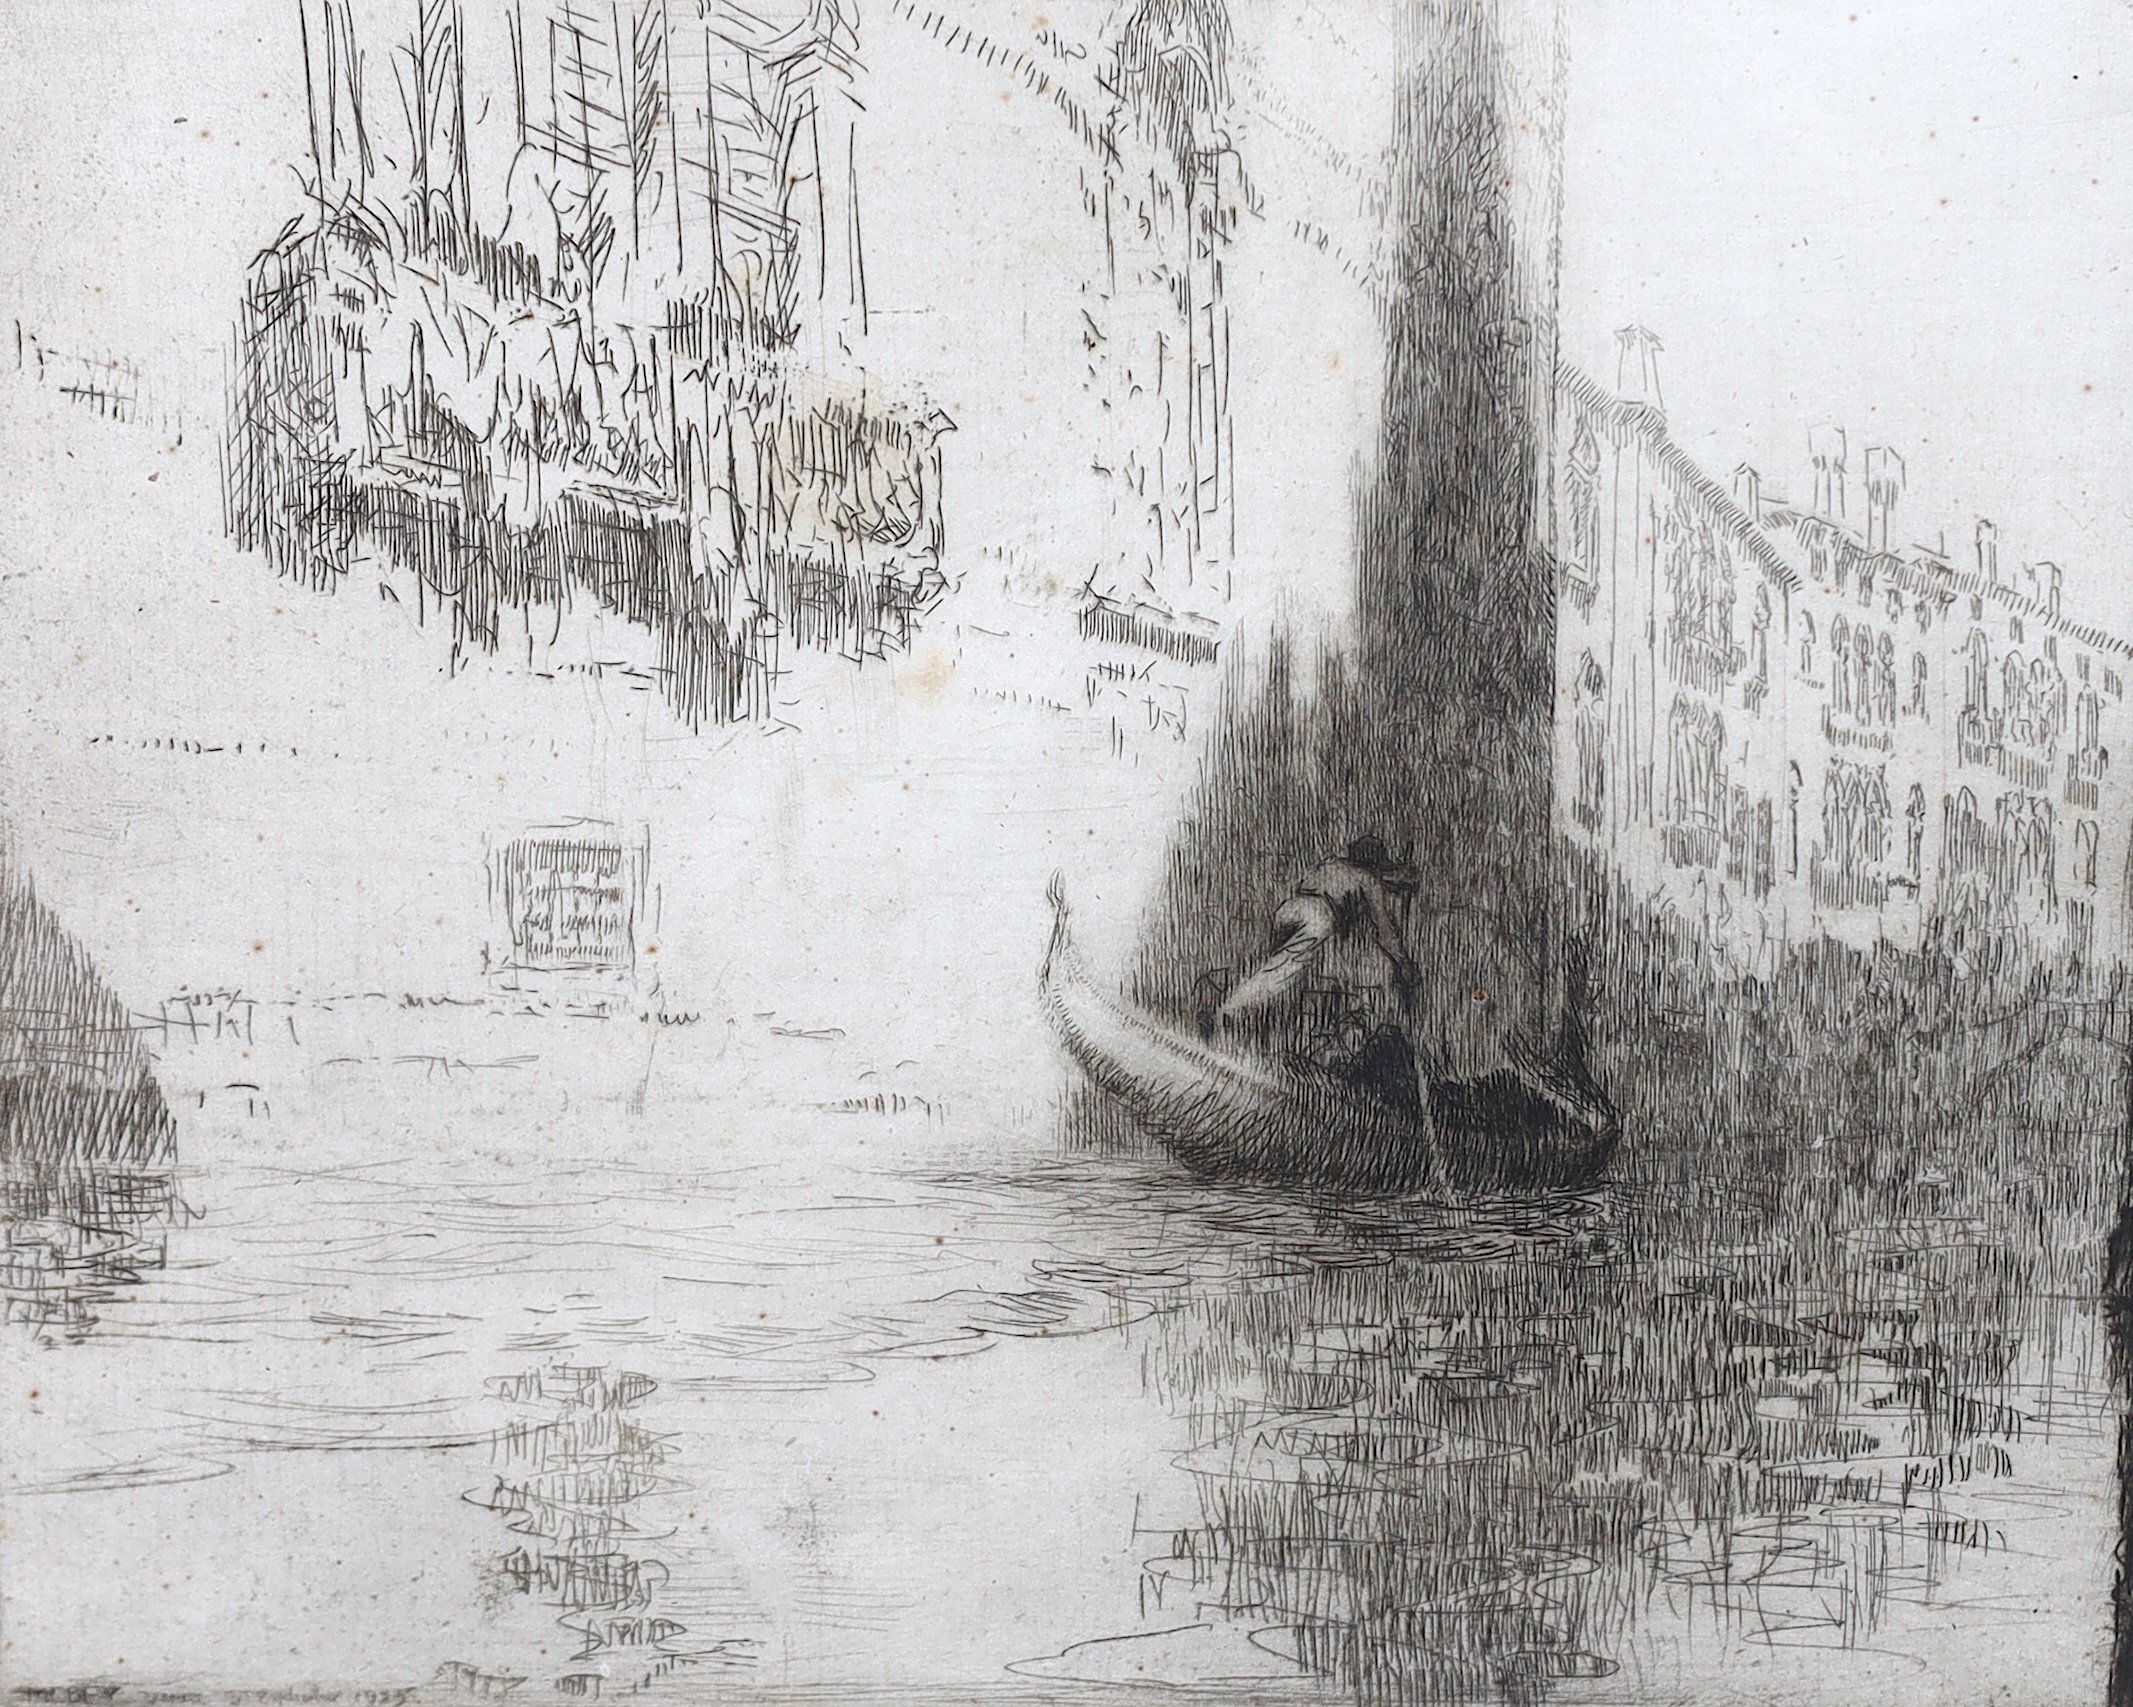 James McBey (Scottish, 1883-1959), 'The Passing Gondola', dry point etching, 21 x 26.5cm